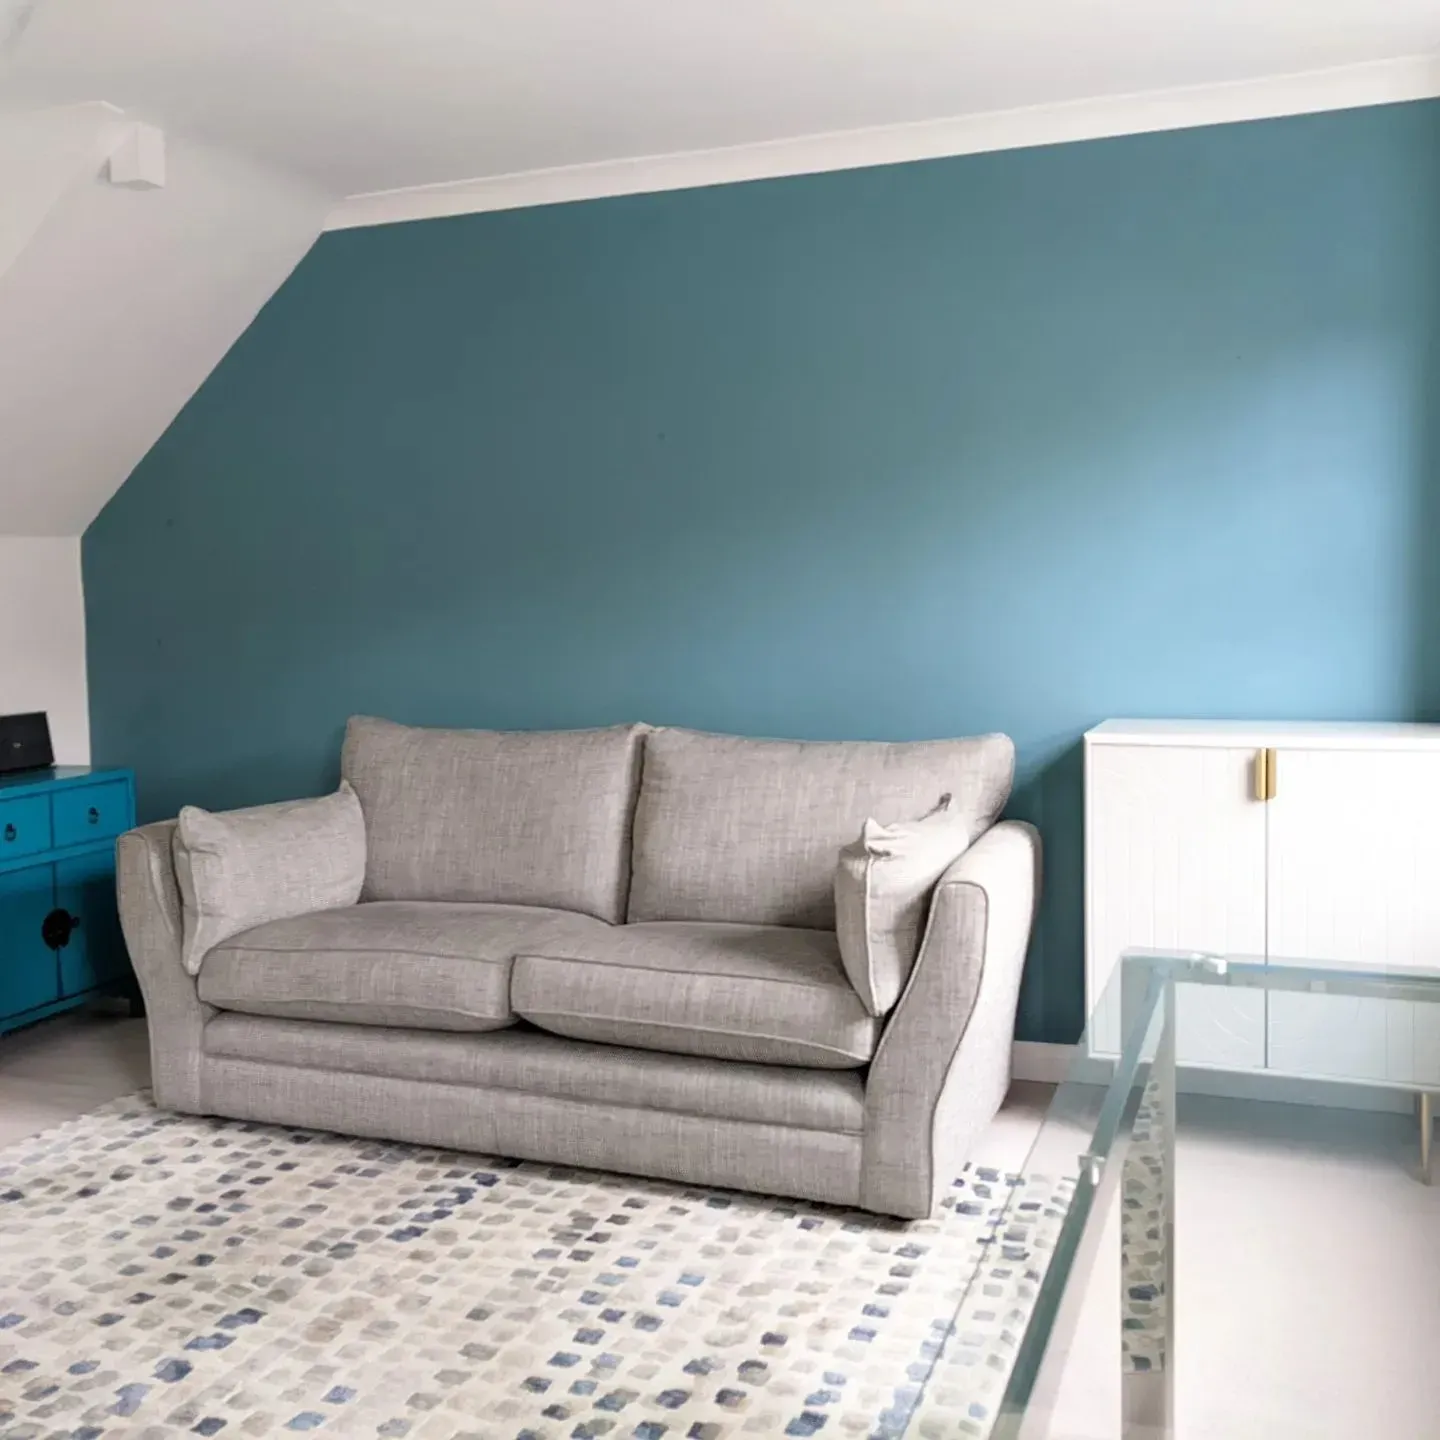 Dulux 10BG 26/134 living room color review